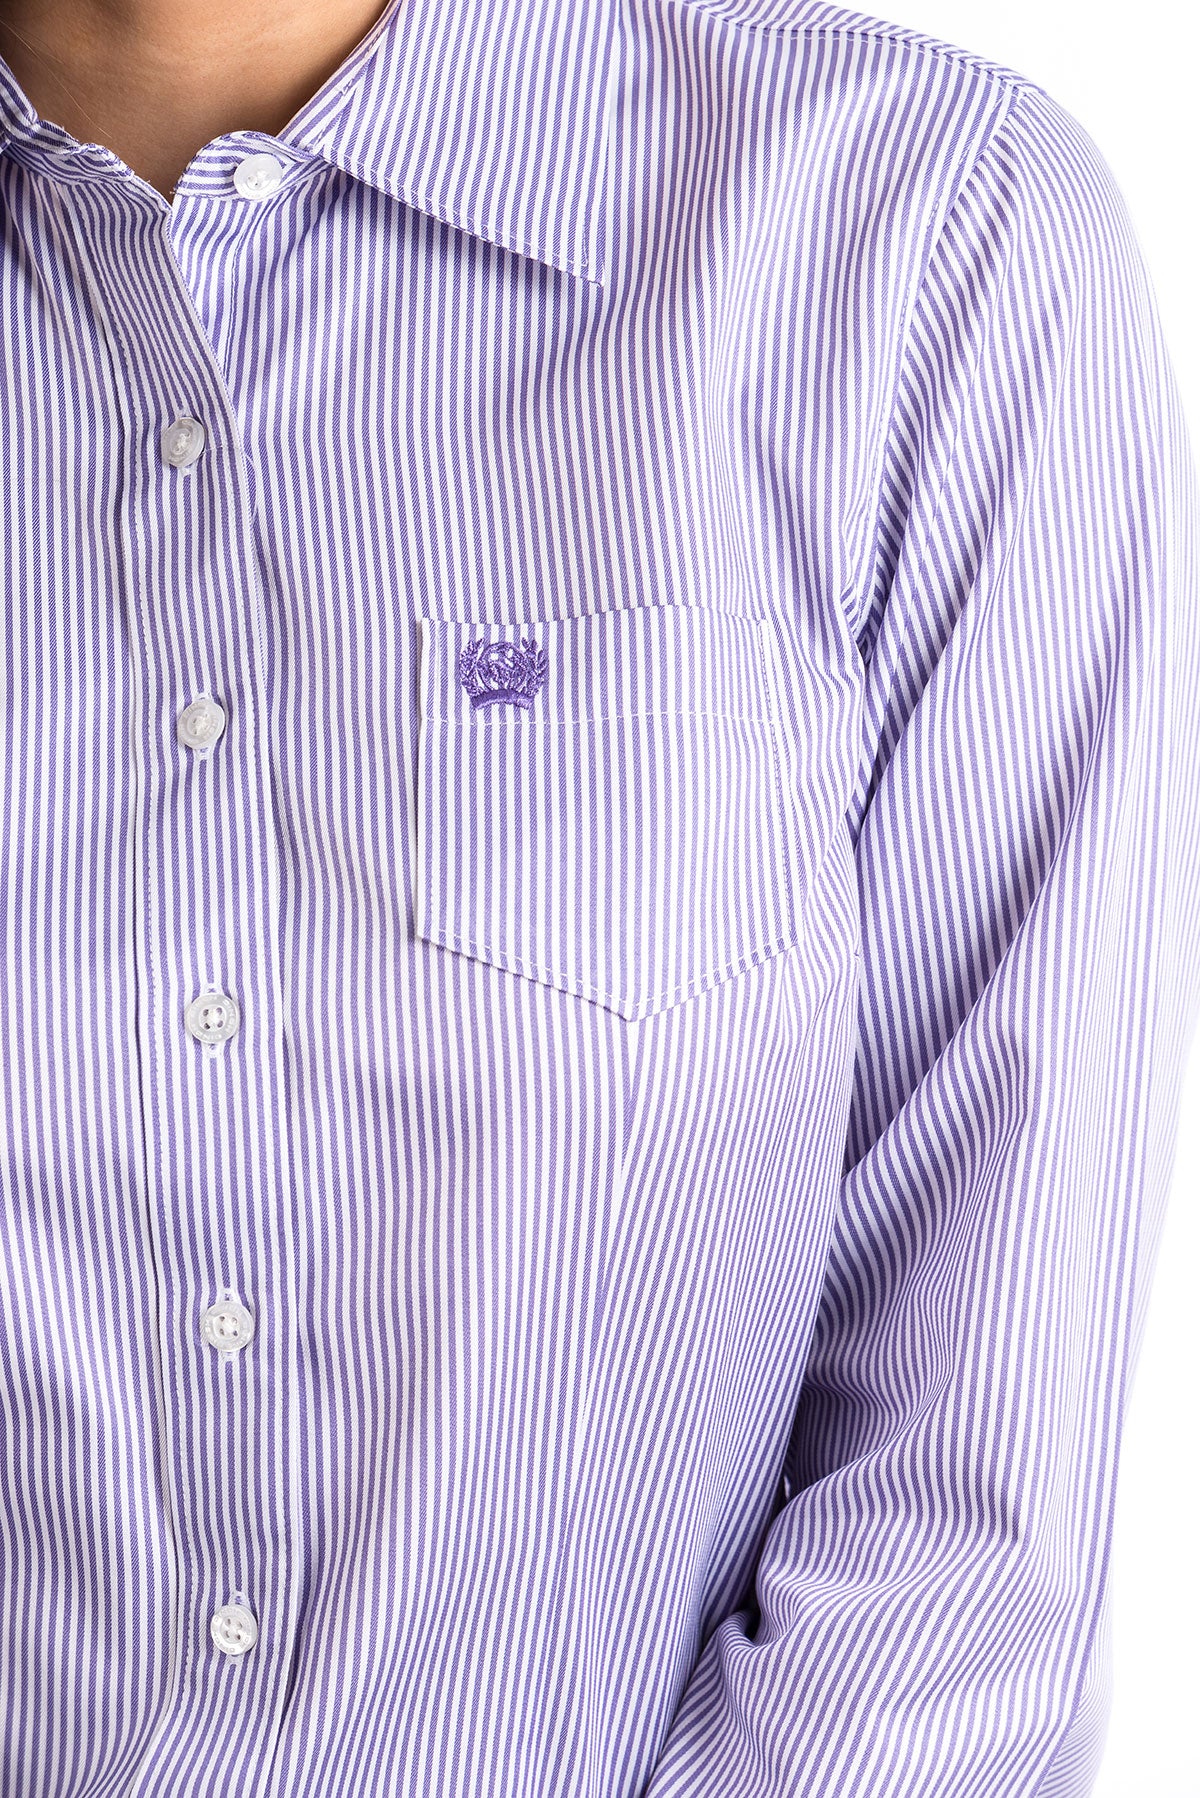 CINCH Women's Purple and White Striped Button-Down Western Shirt